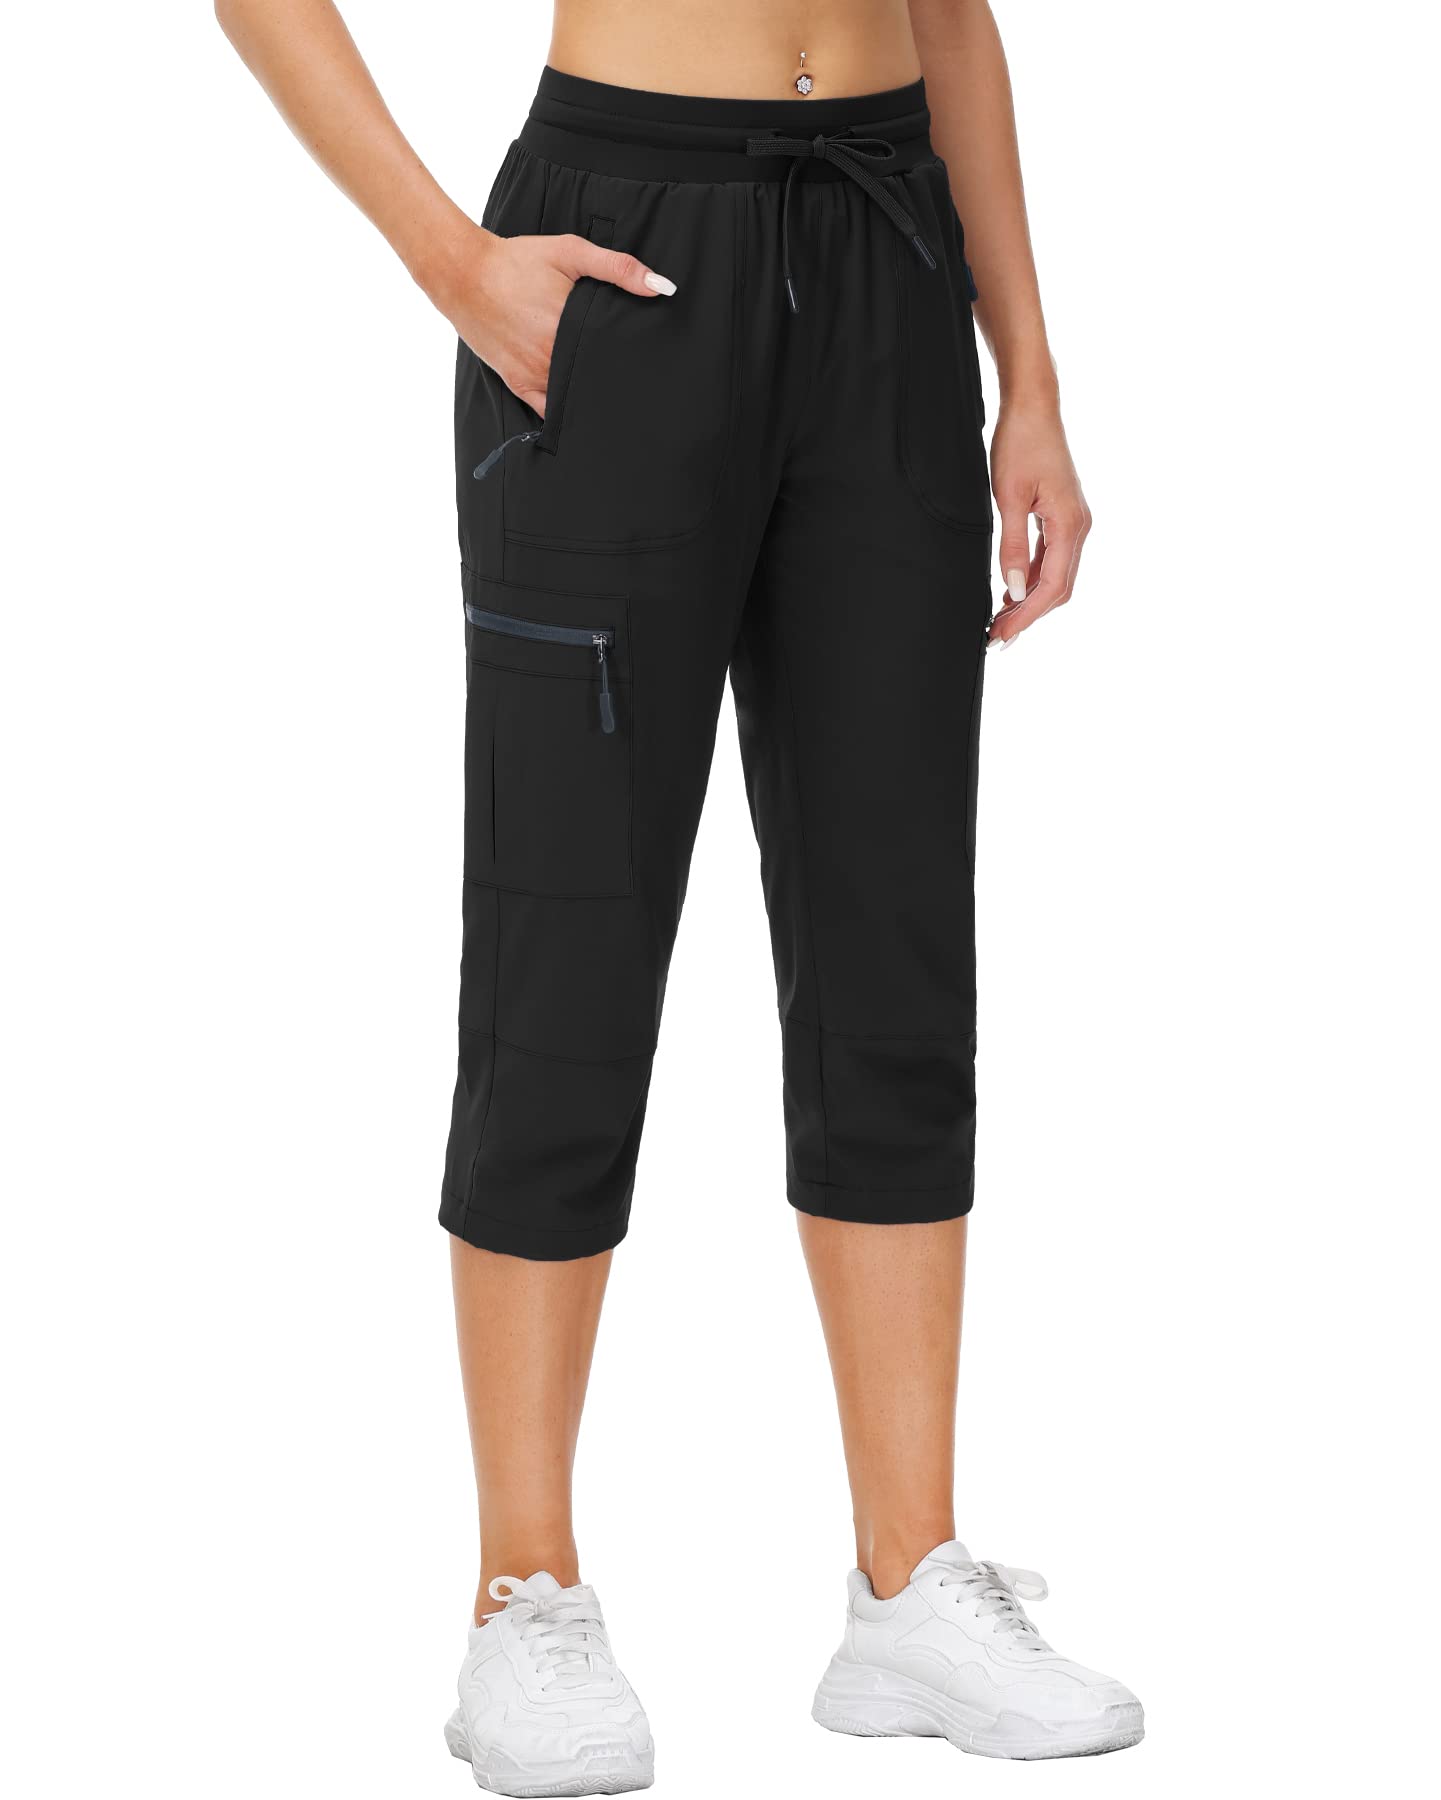 VILIGO Capris for Women Lightweight Summer Workout Waterproof Solid Capri Pants Black M